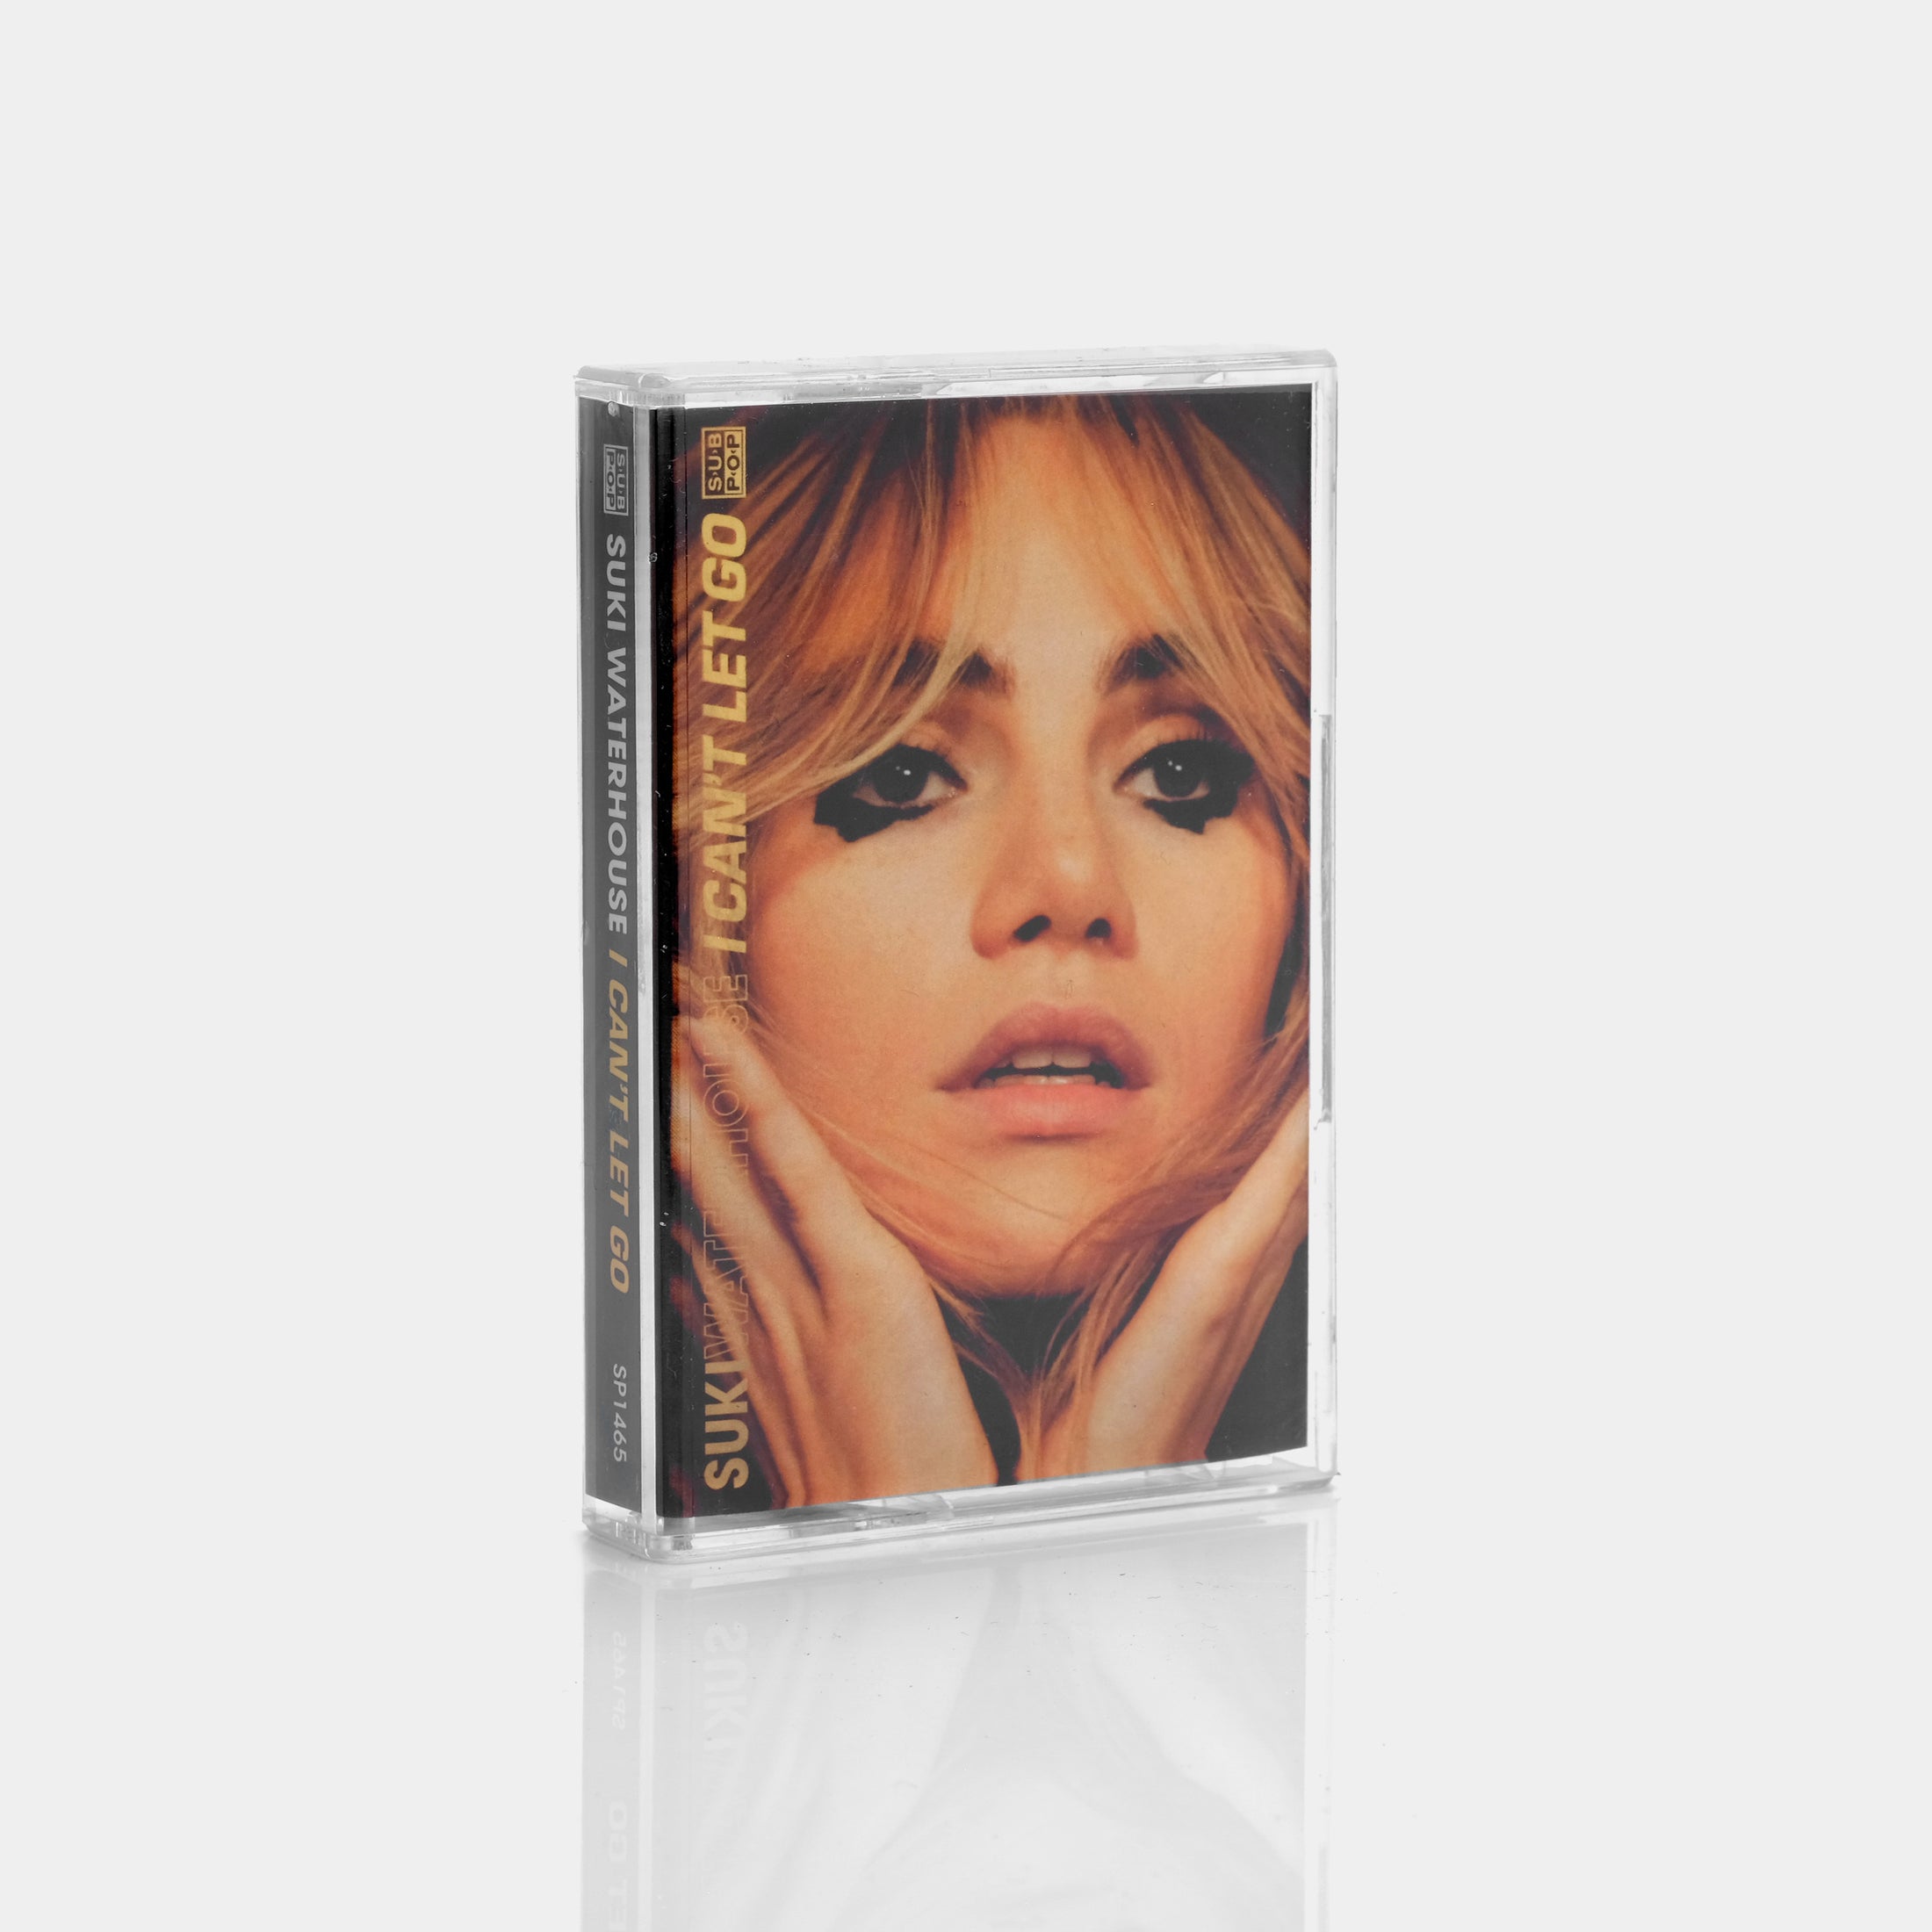 Suki Waterhouse - I Can't Let Go Cassette Tape